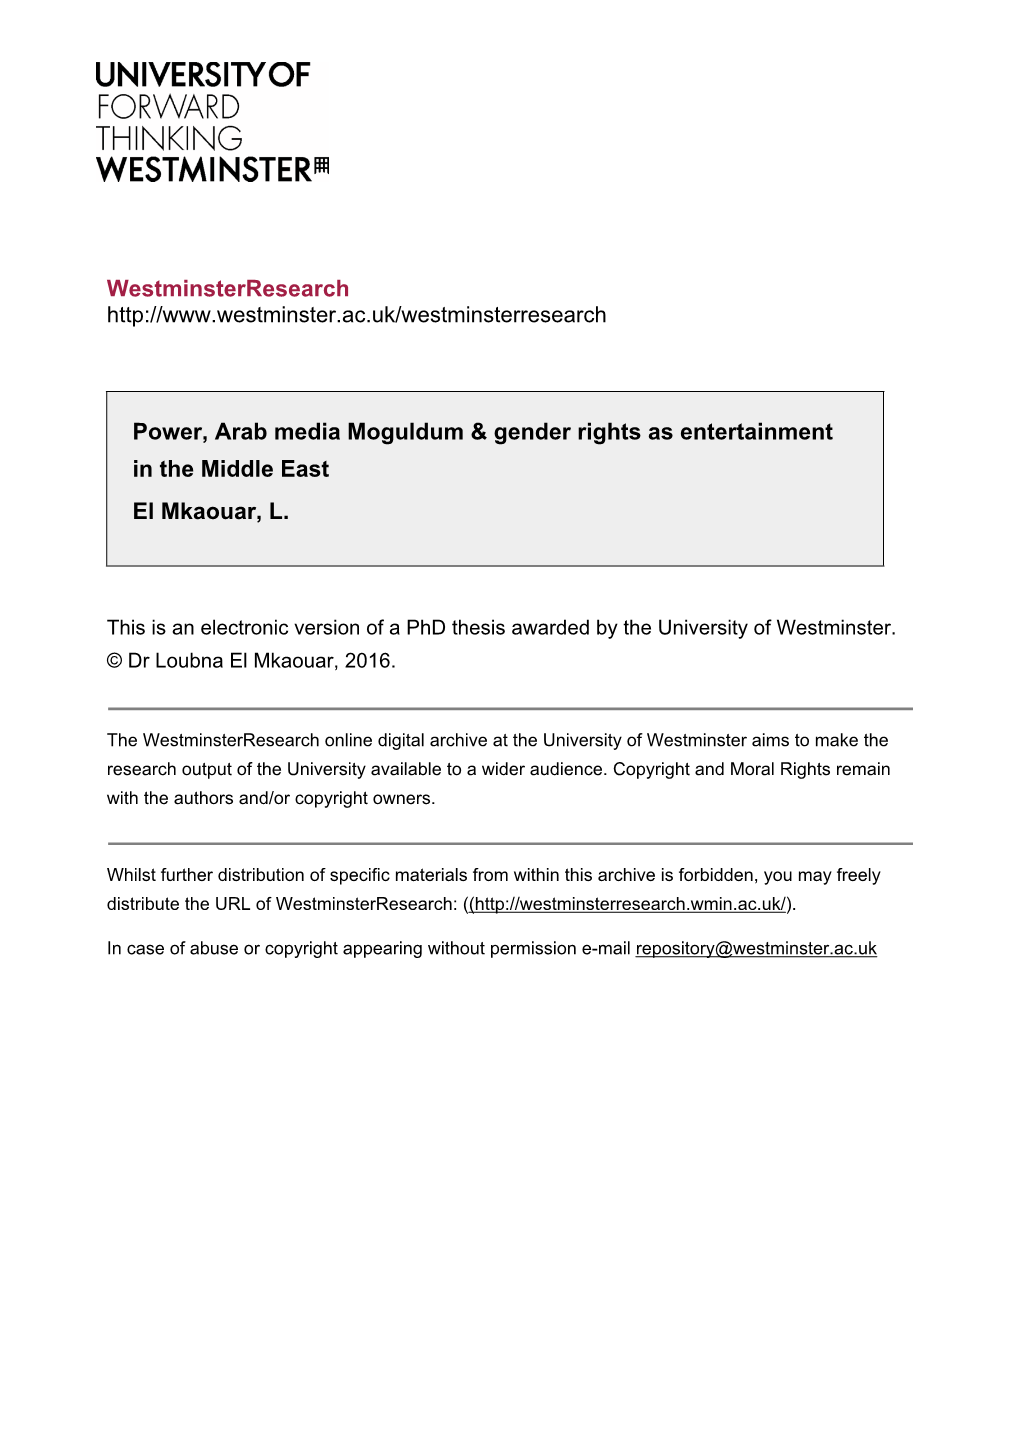 Westminsterresearch Power, Arab Media Moguldum & Gender Rights